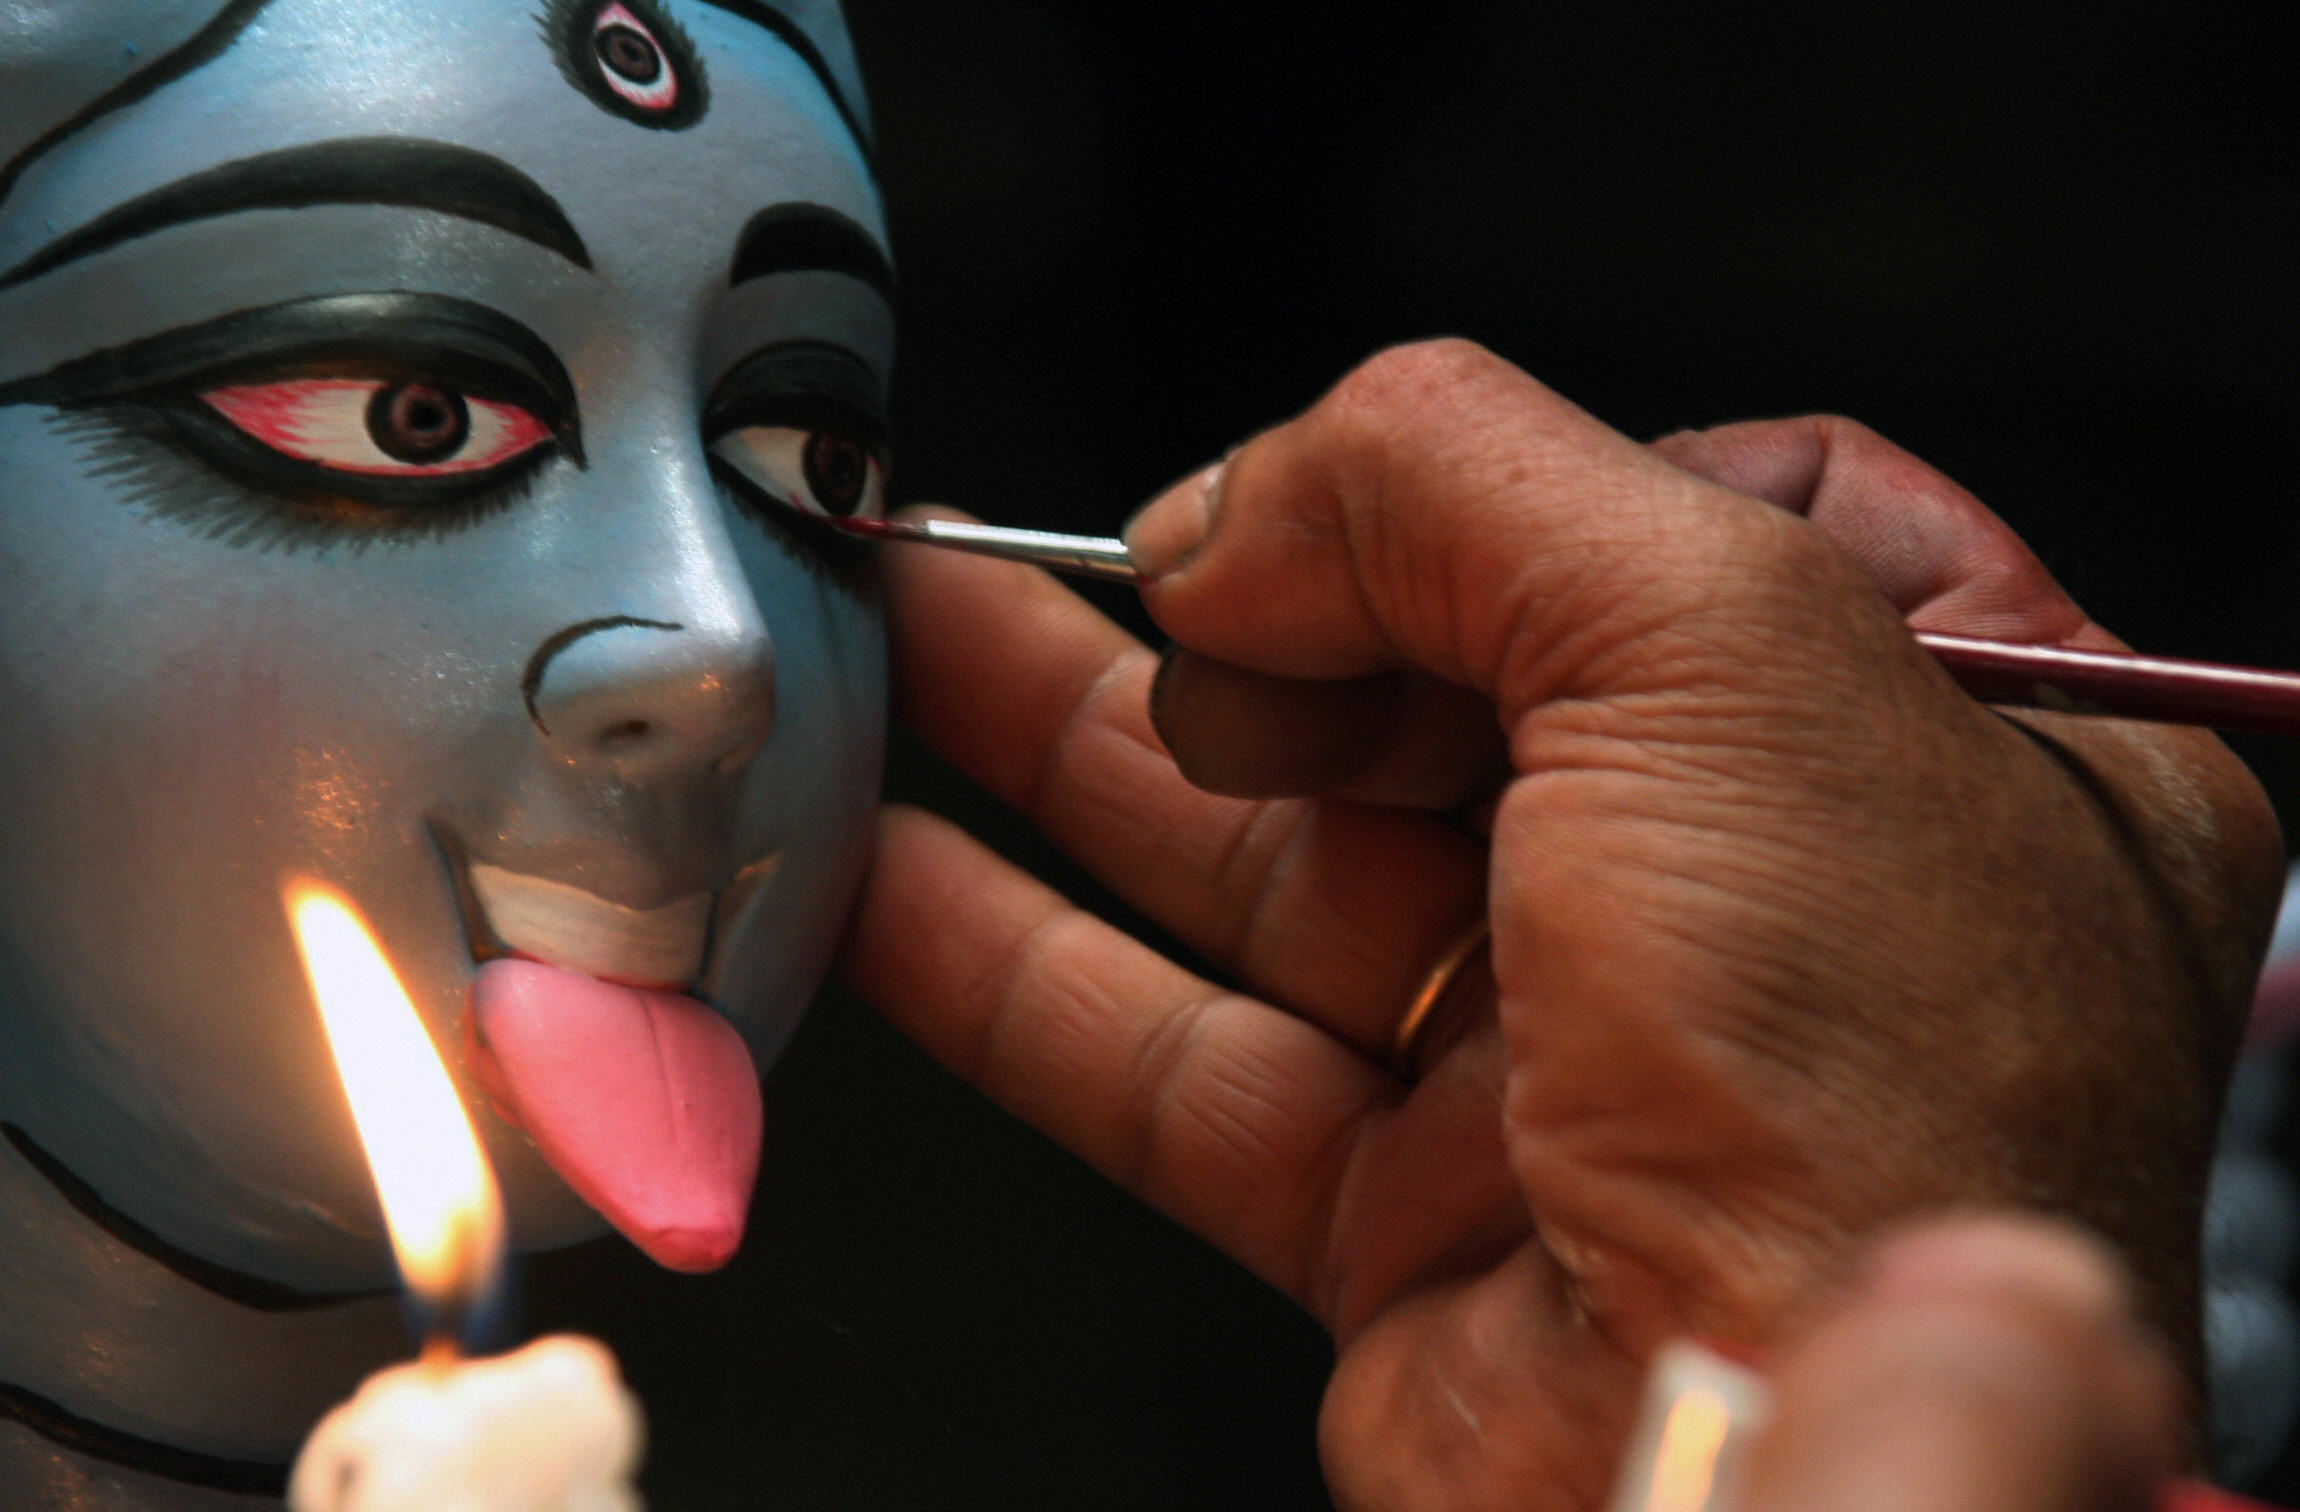 Someone painting an idol of Kali